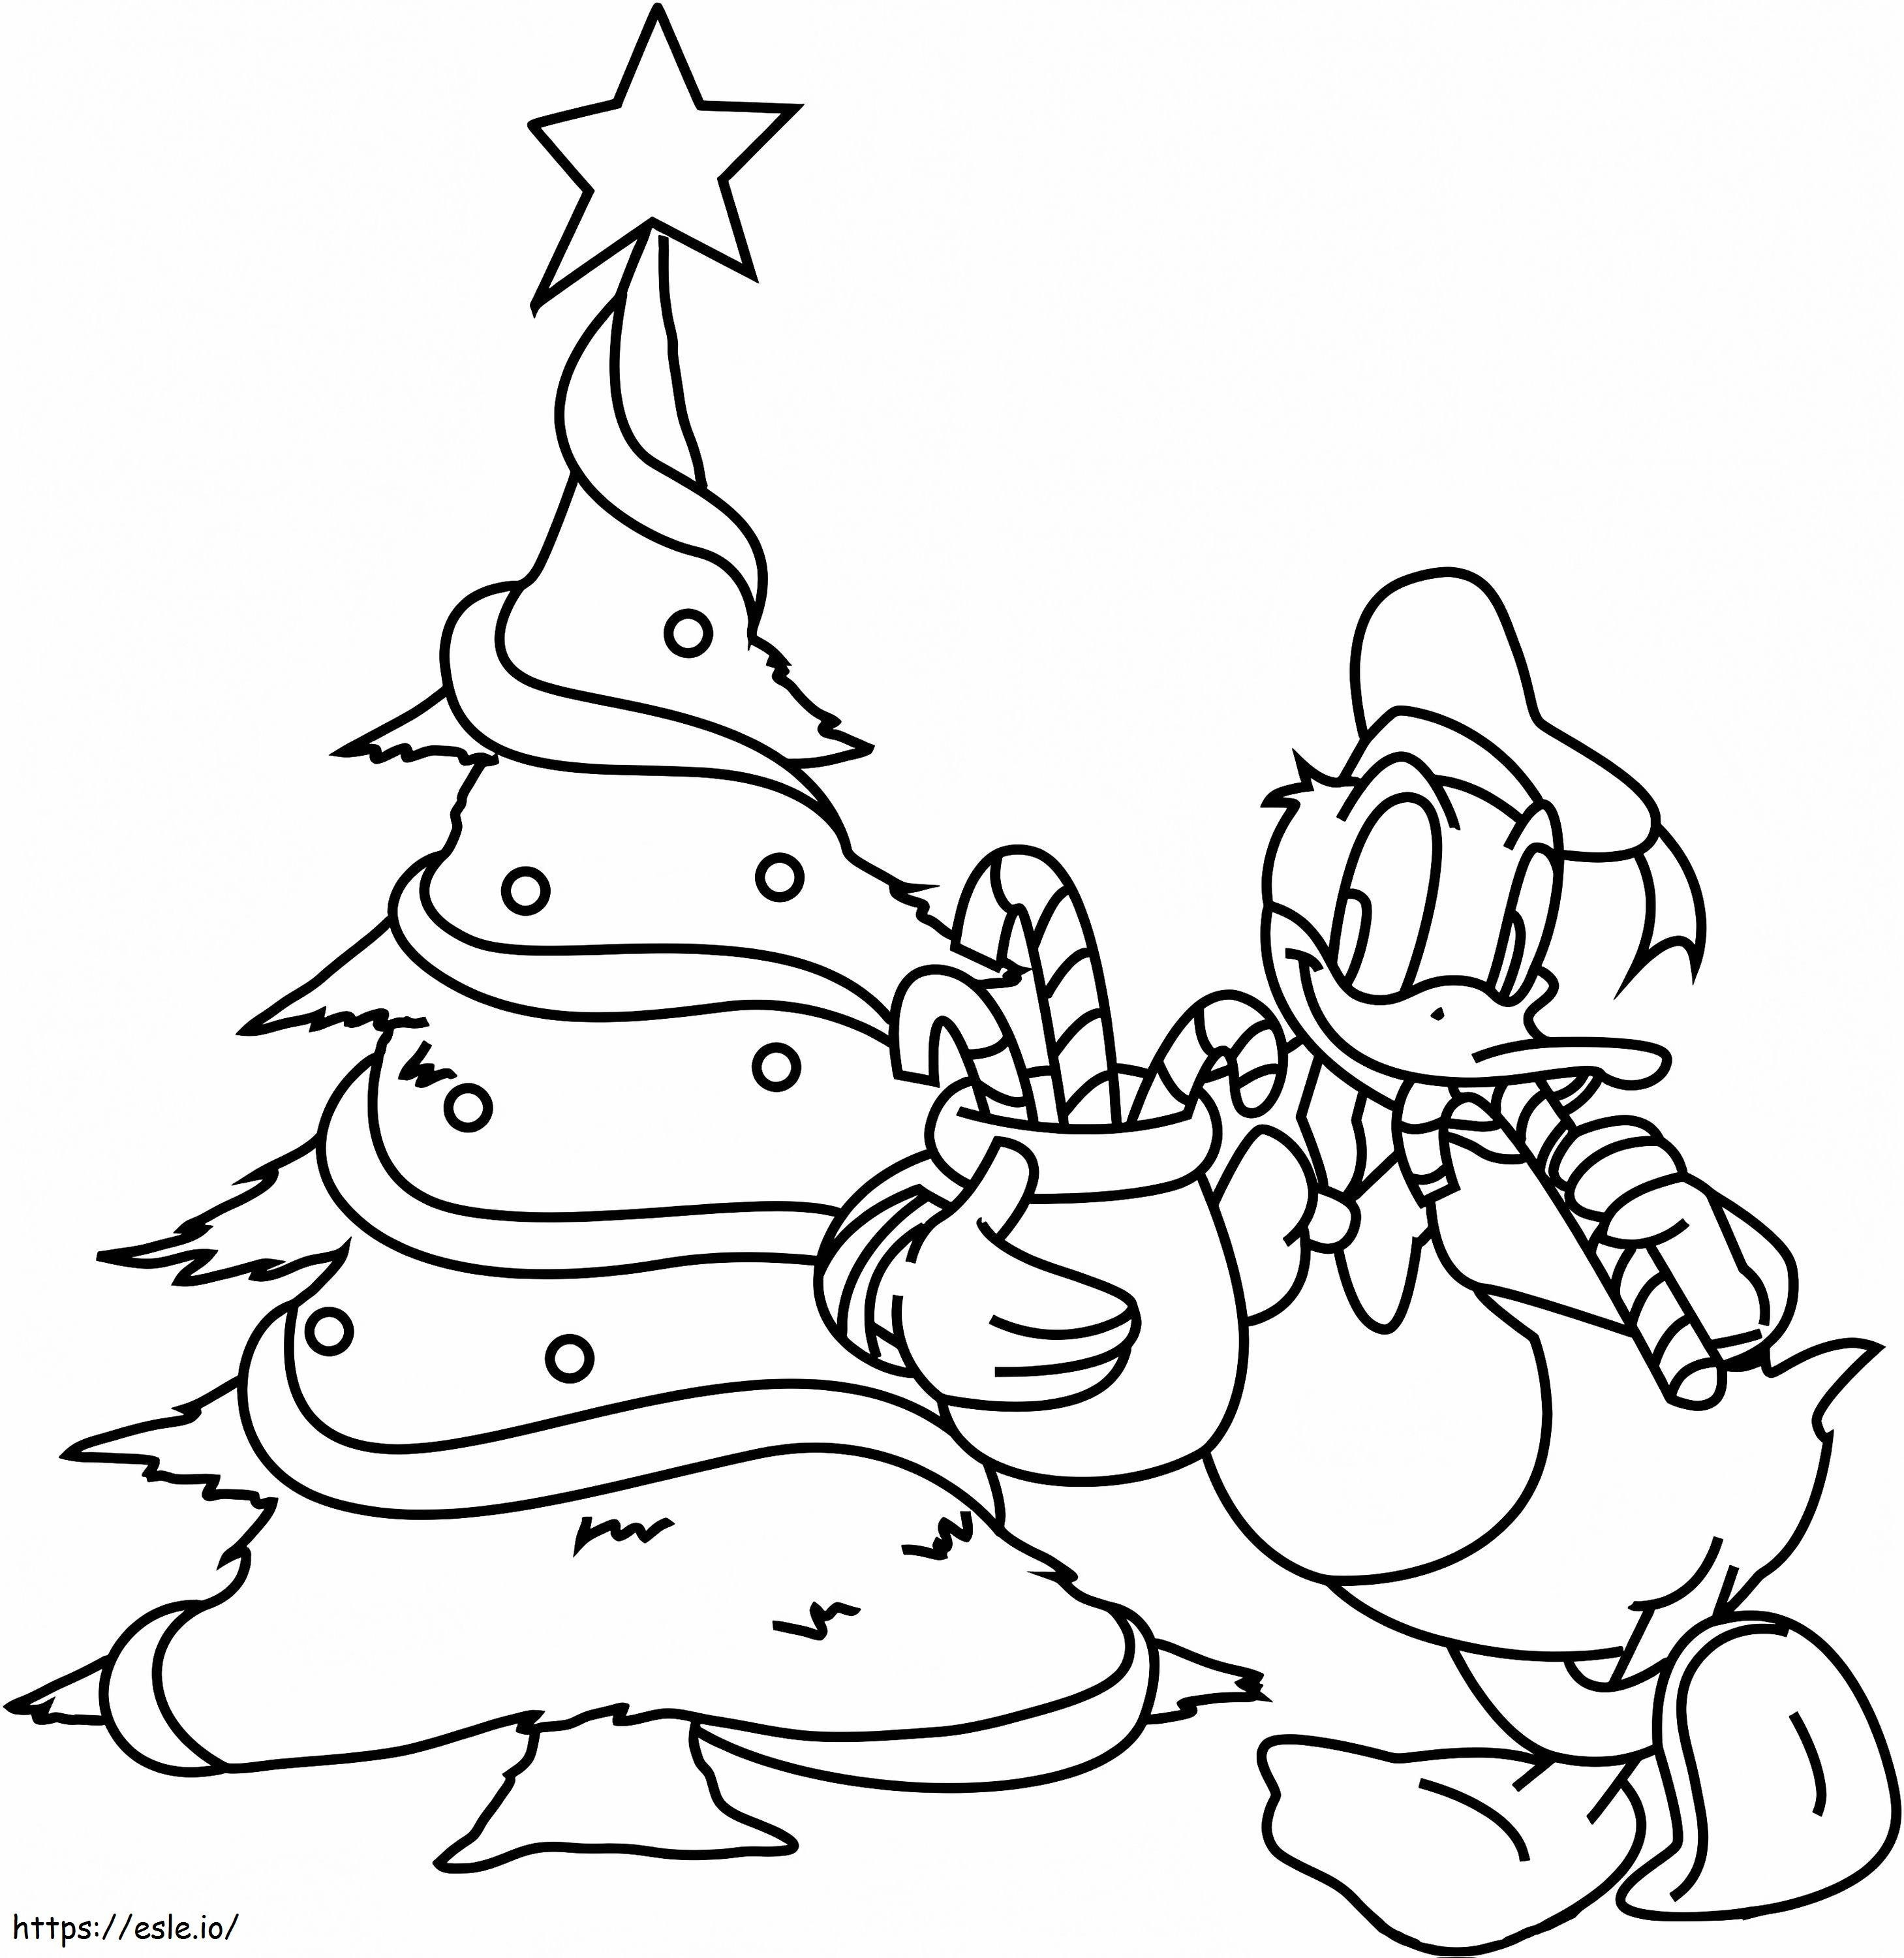  Pato Donald Con Árbol De Navidad A4 para colorear